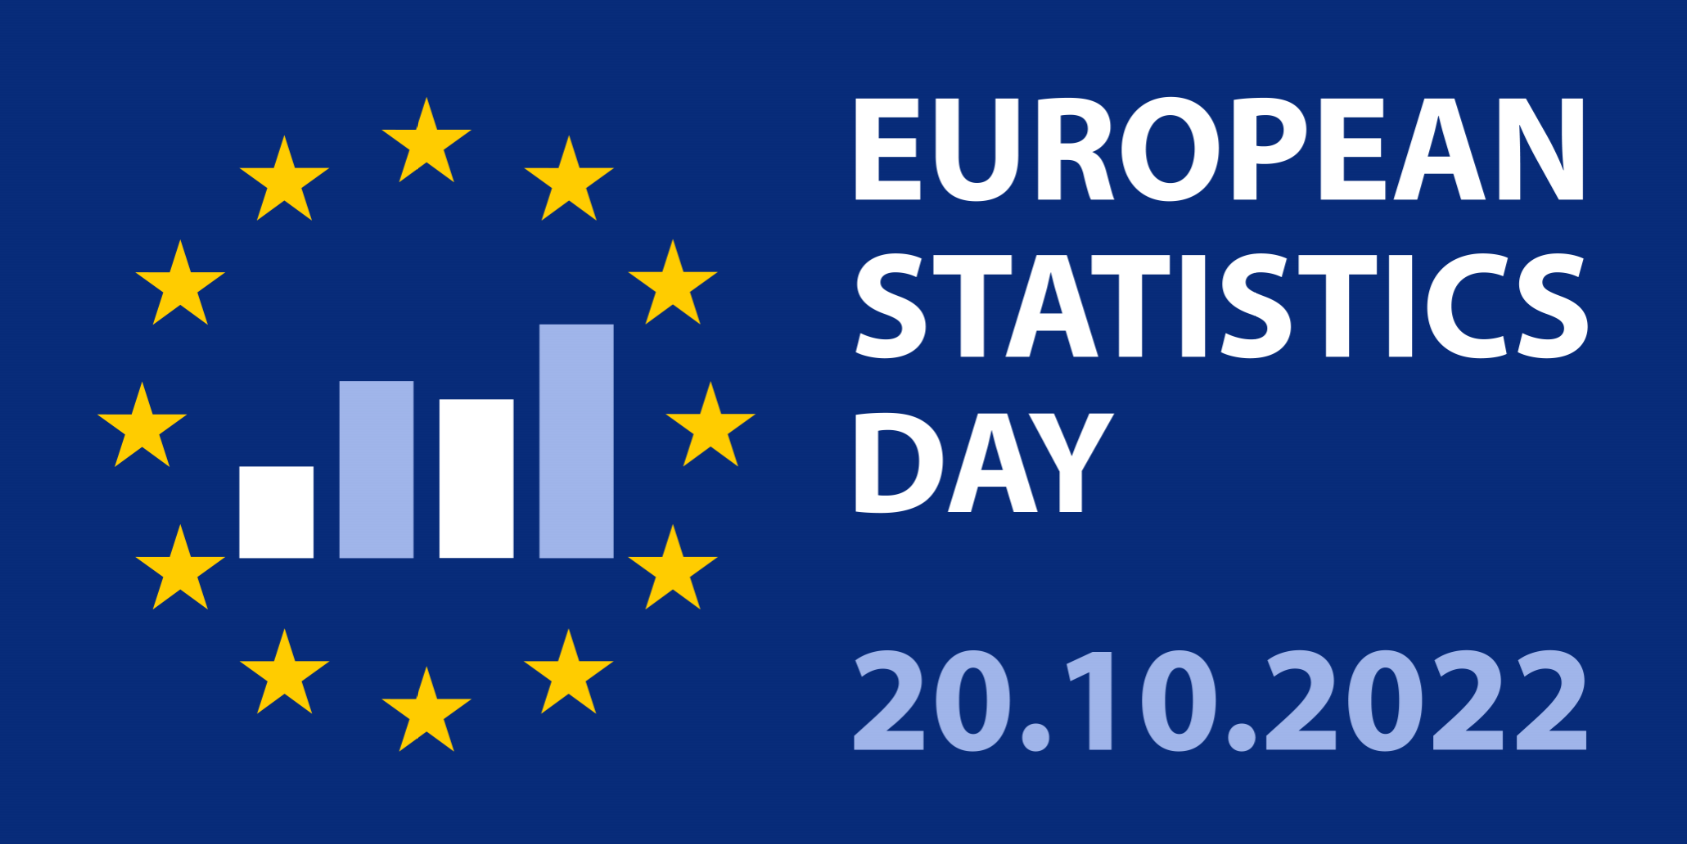 European Statistics Day 2022